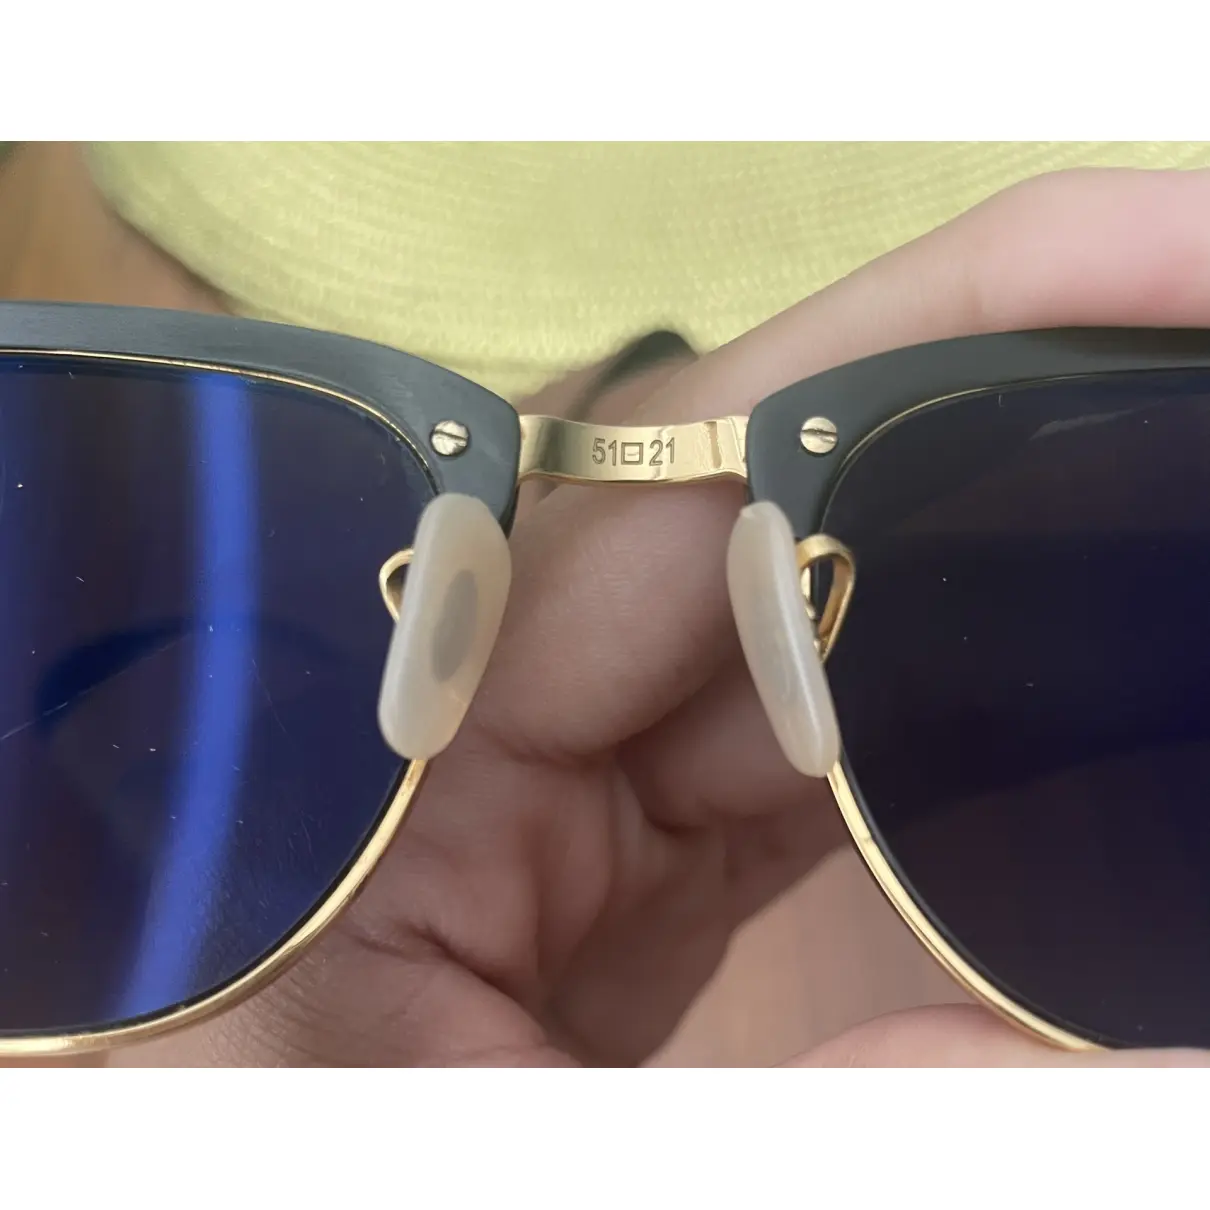 Luxury Ray-Ban Sunglasses Women